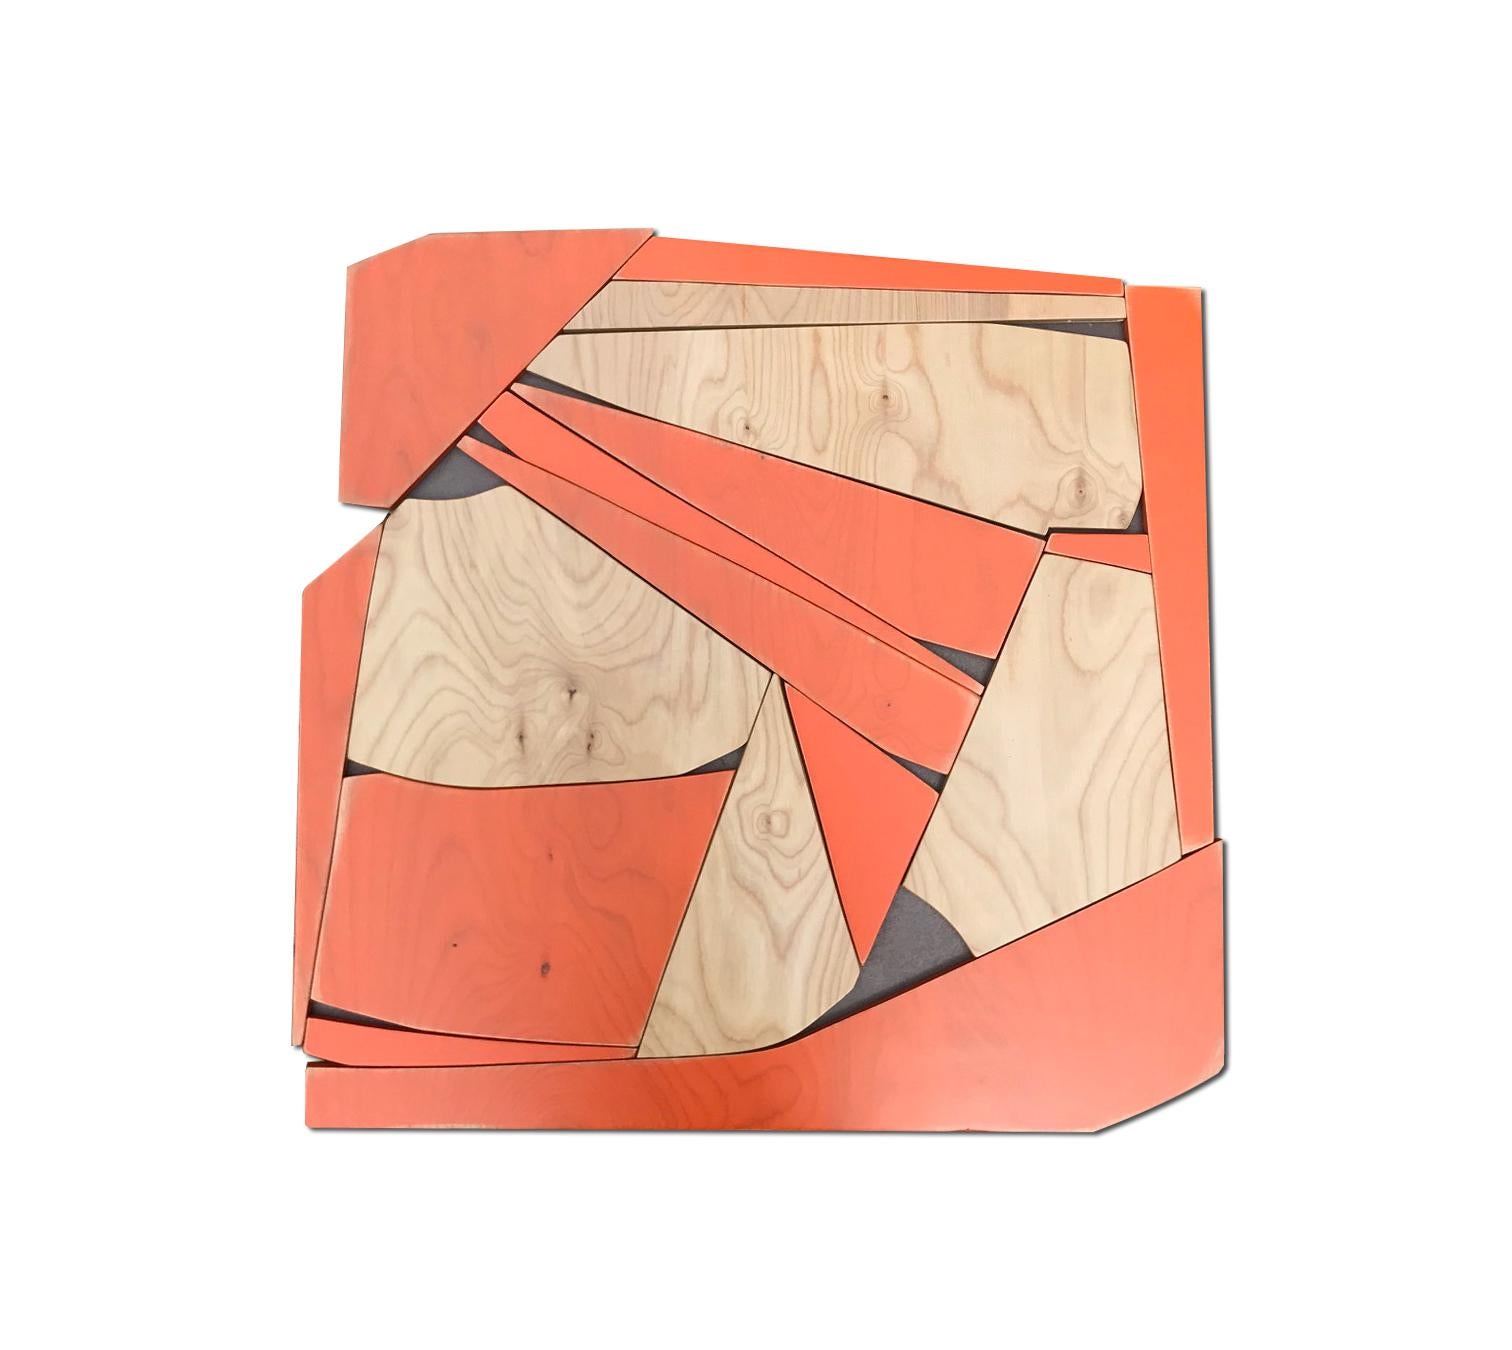 Transponder (orange mid-modern wood wall sculpture, abstract geometric art)